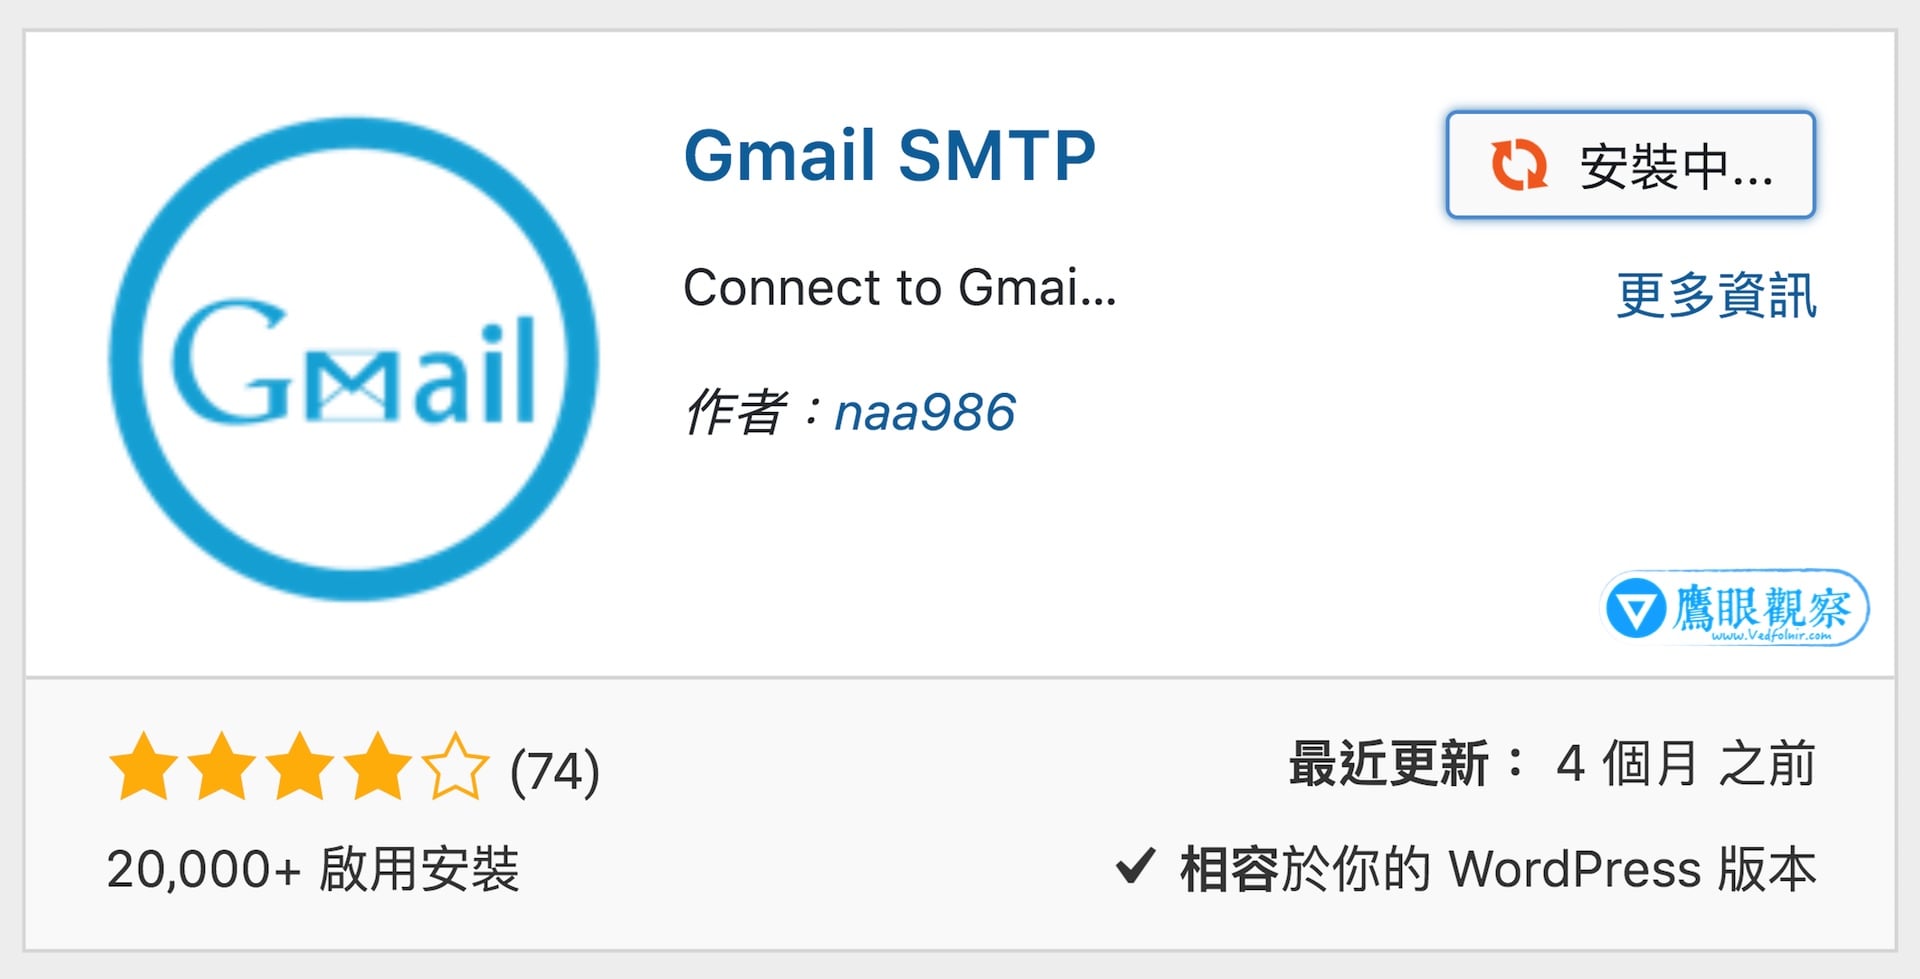 WordPress 外掛「Gmail SMTP」支援外寄電子郵件、訊息迴響通知功能